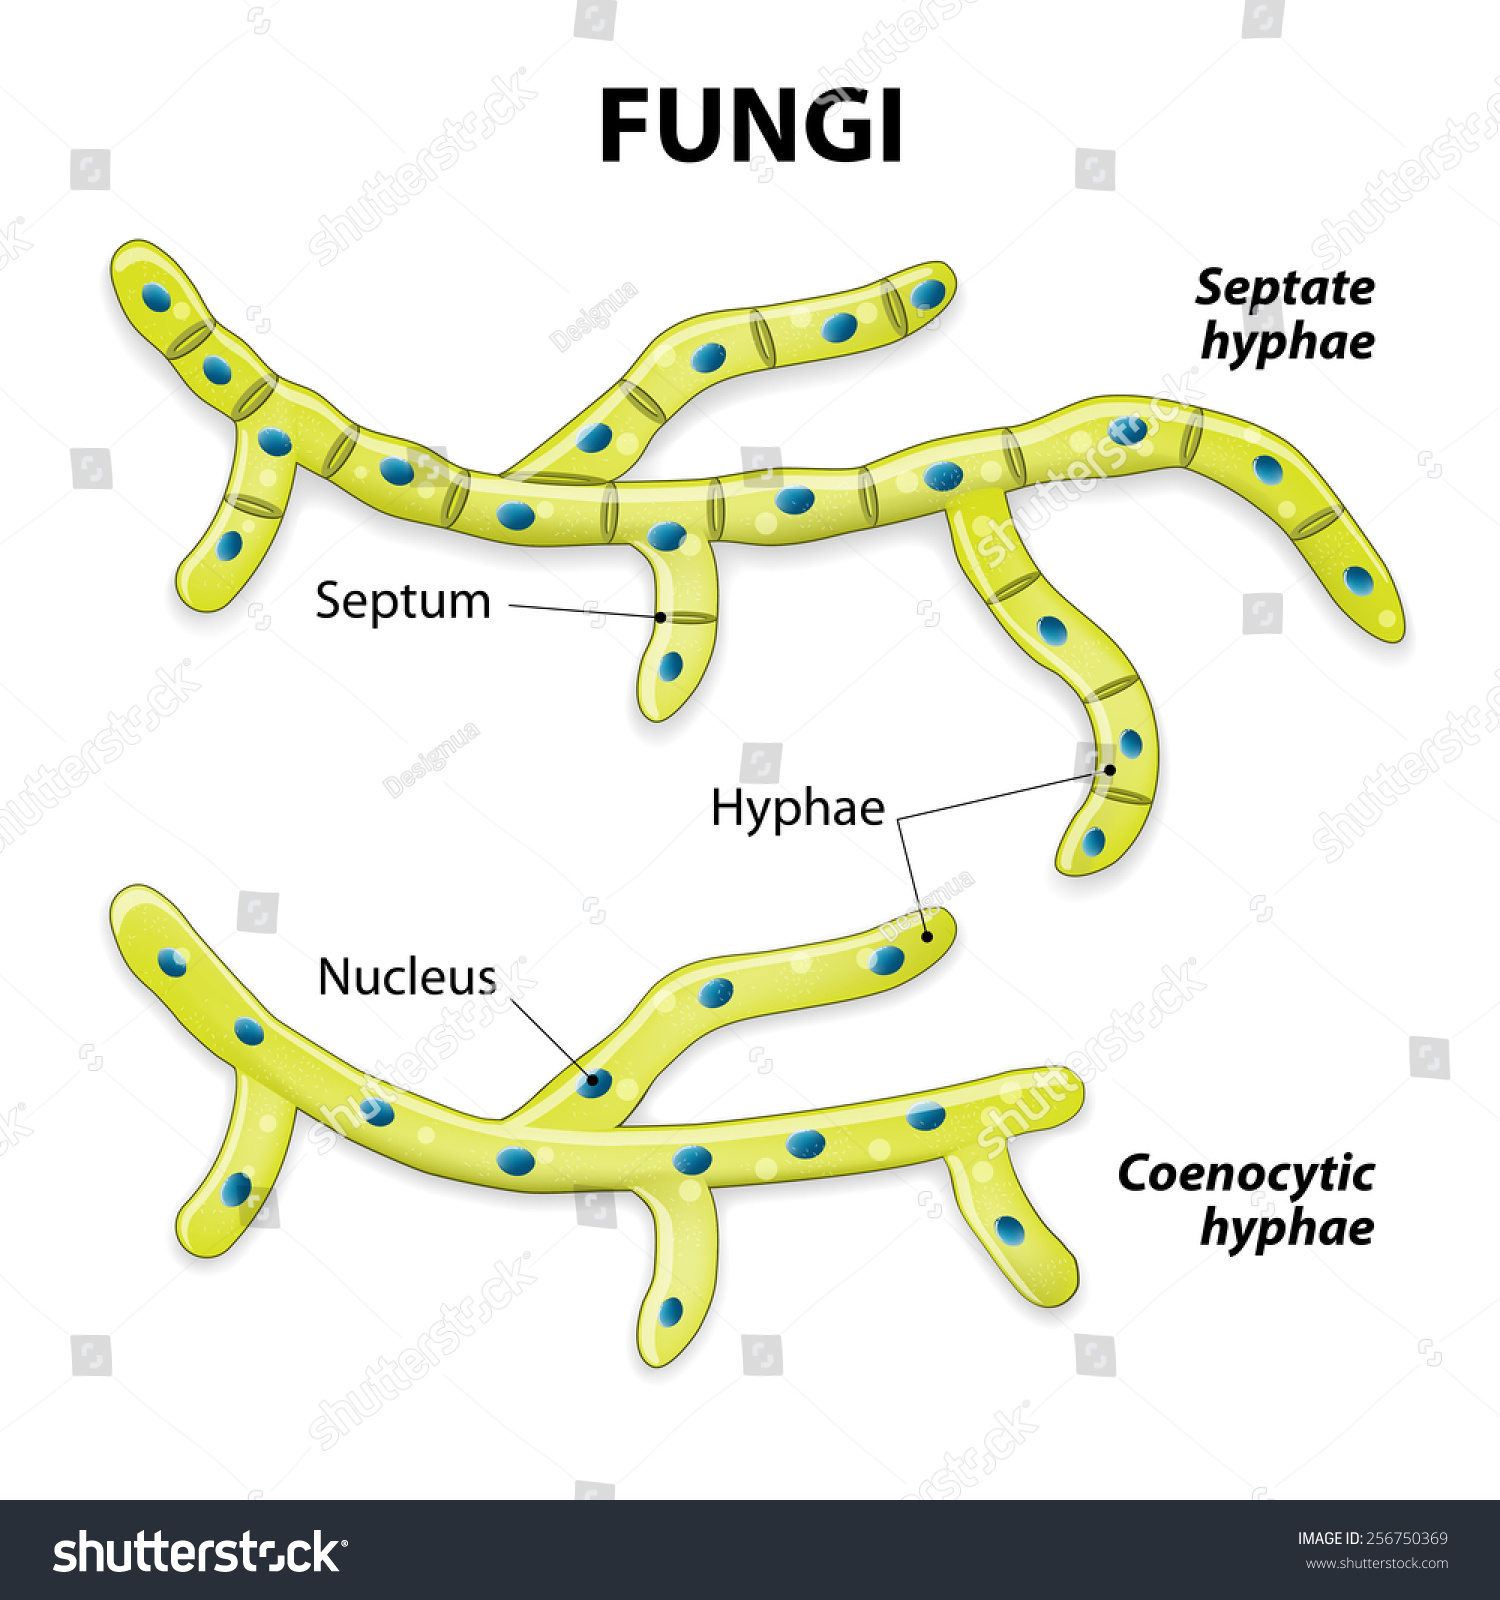 How are fungi classified?